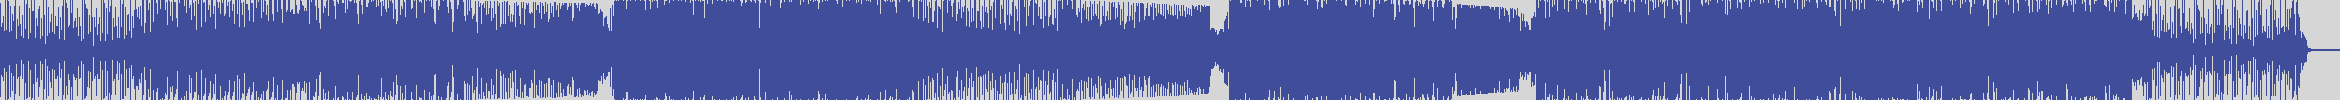 suxess [SX038] Dyson Kellerman - Pa Pa Pa [Extended Mix] audio wave form